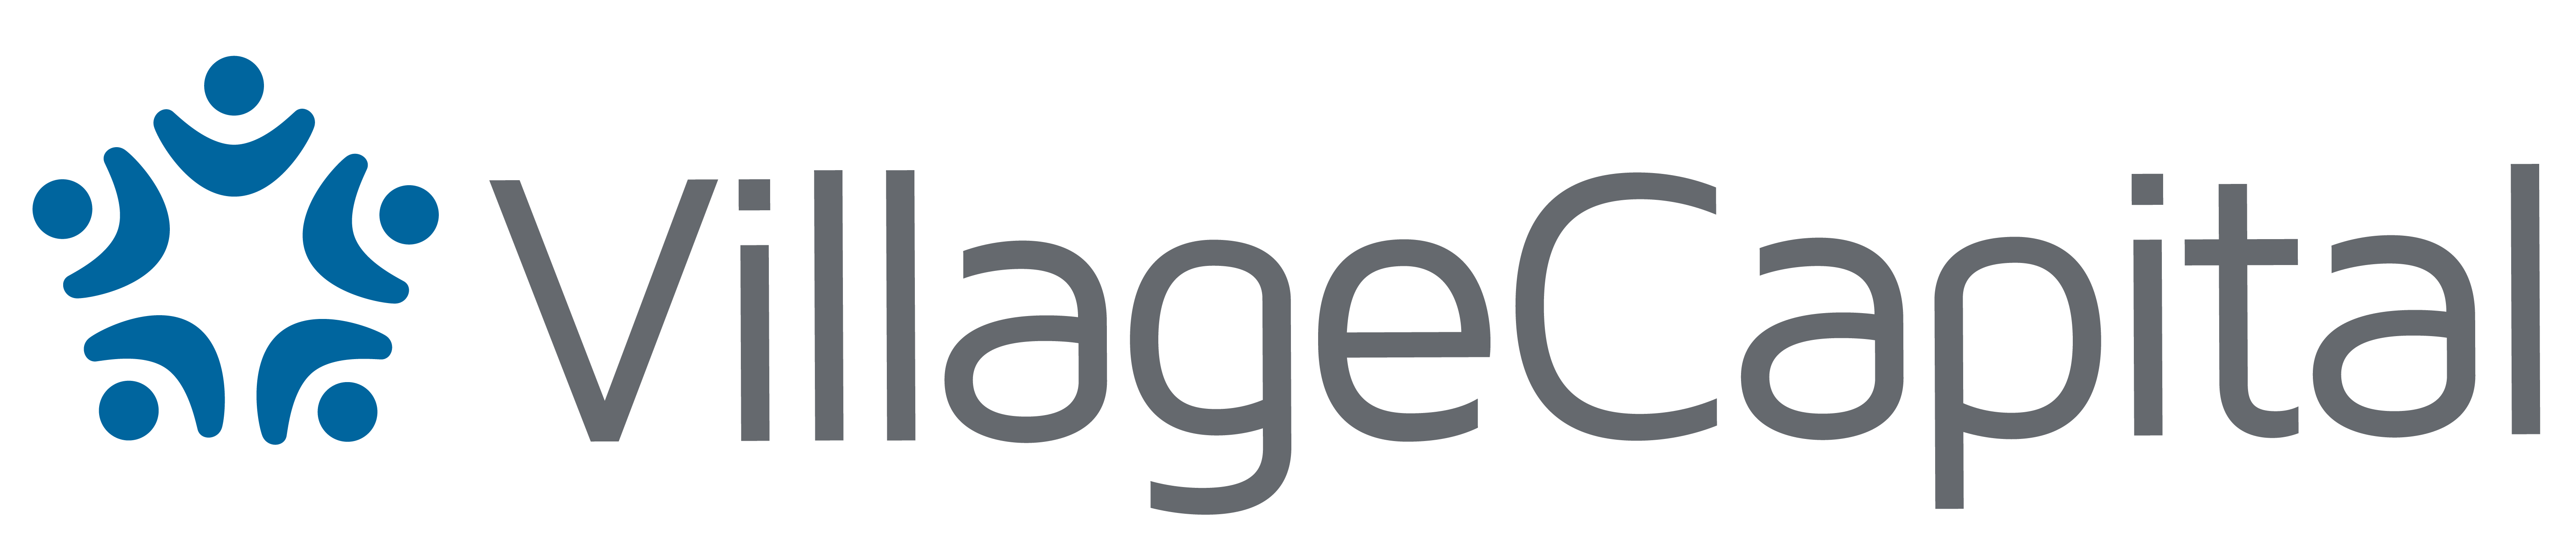 VillageCapital logo